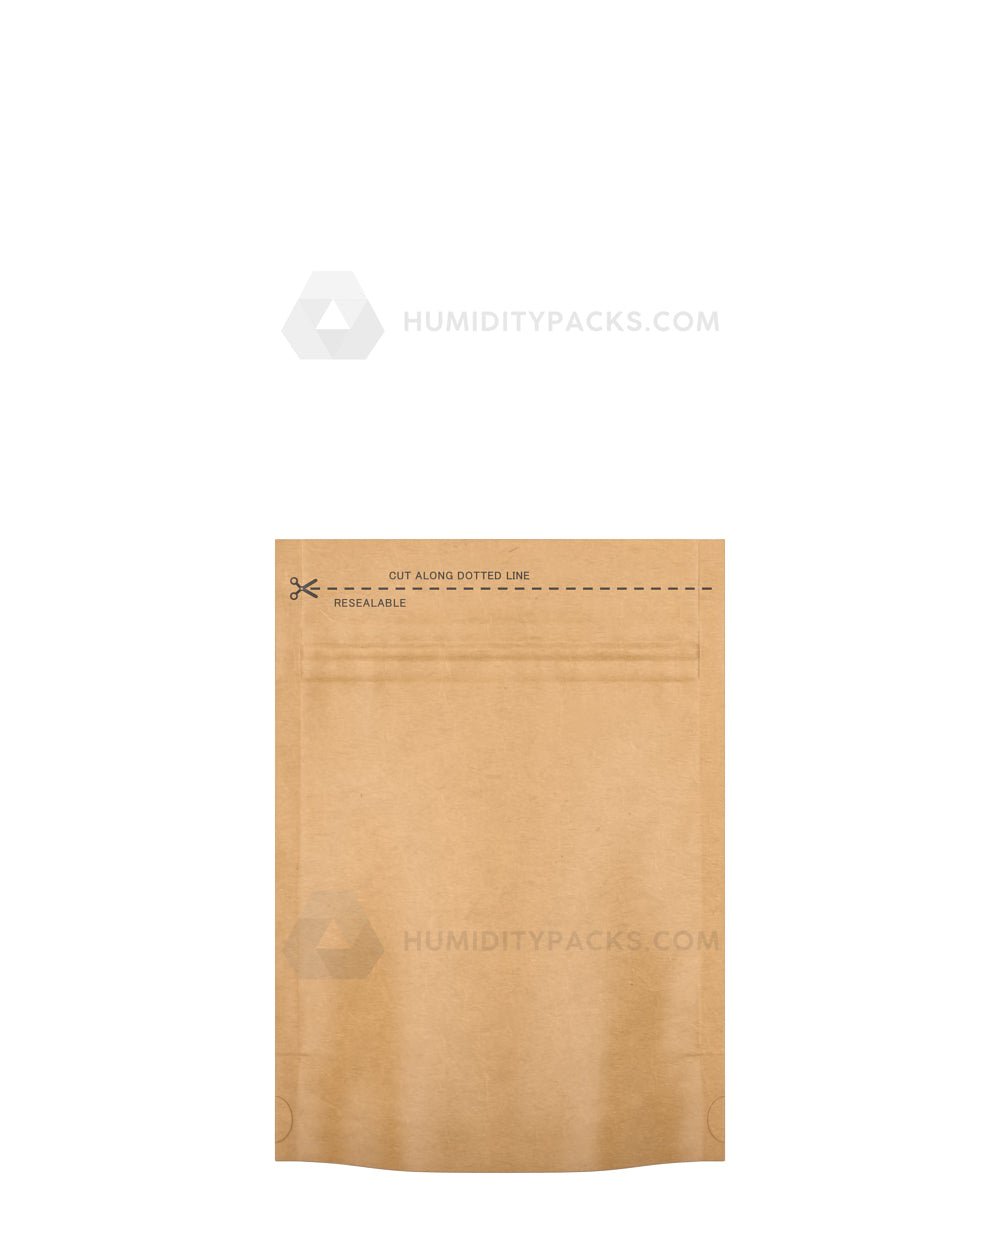 Matte-Kraft Paper 3.62" x 5" Vista Mylar Tamper Evident Tear Notch Bags (3.5 grams) 1000/Box Humidity Packs - 3